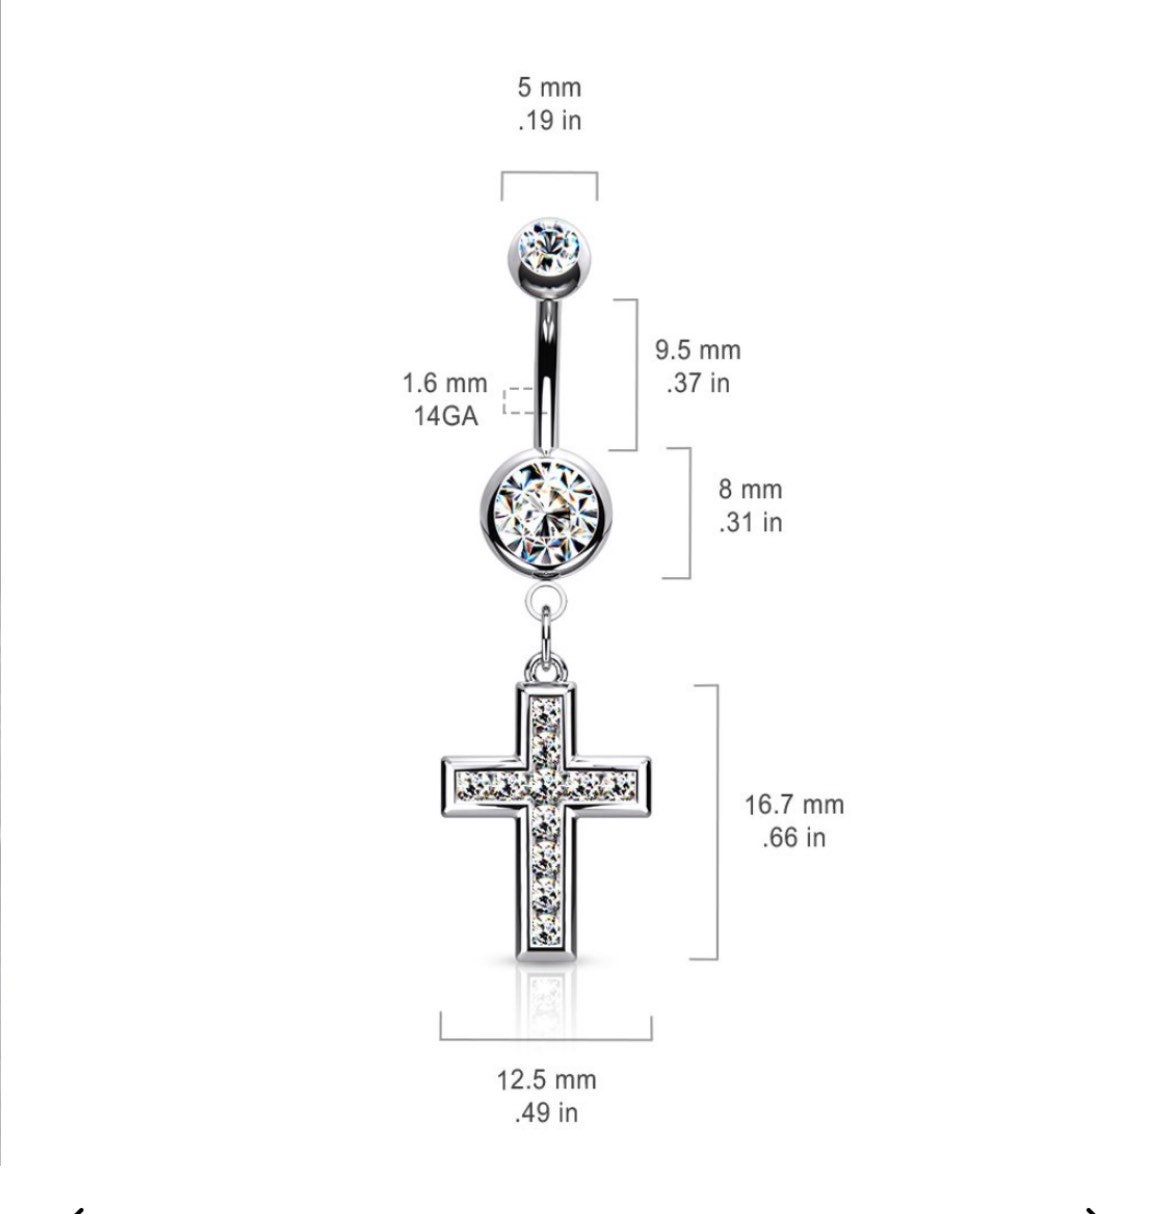 Crystal Baroque Cross Rhinestones Belly Button Ring – SugarAndVapor